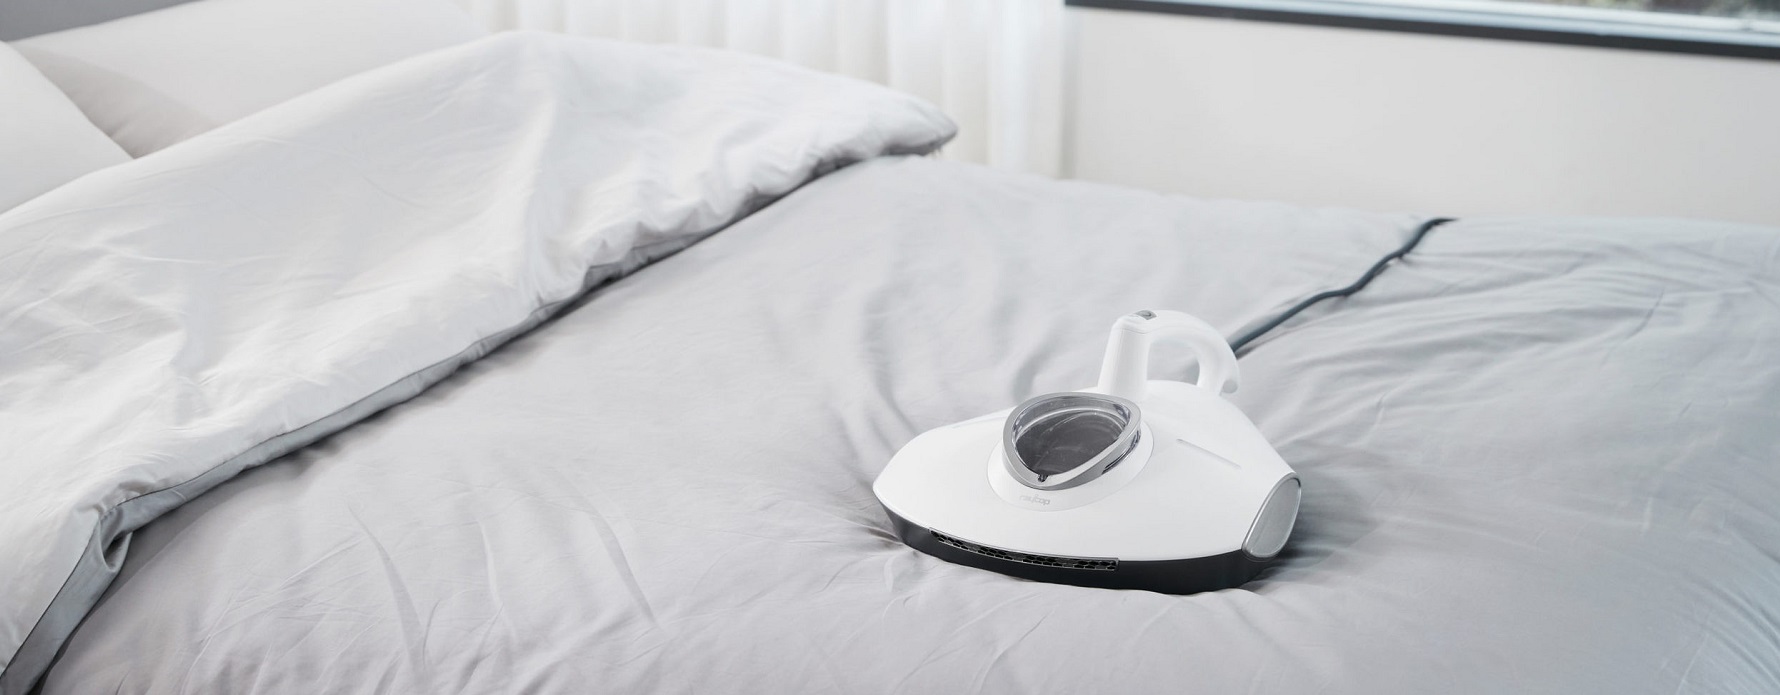 Bed Cleaner Robot